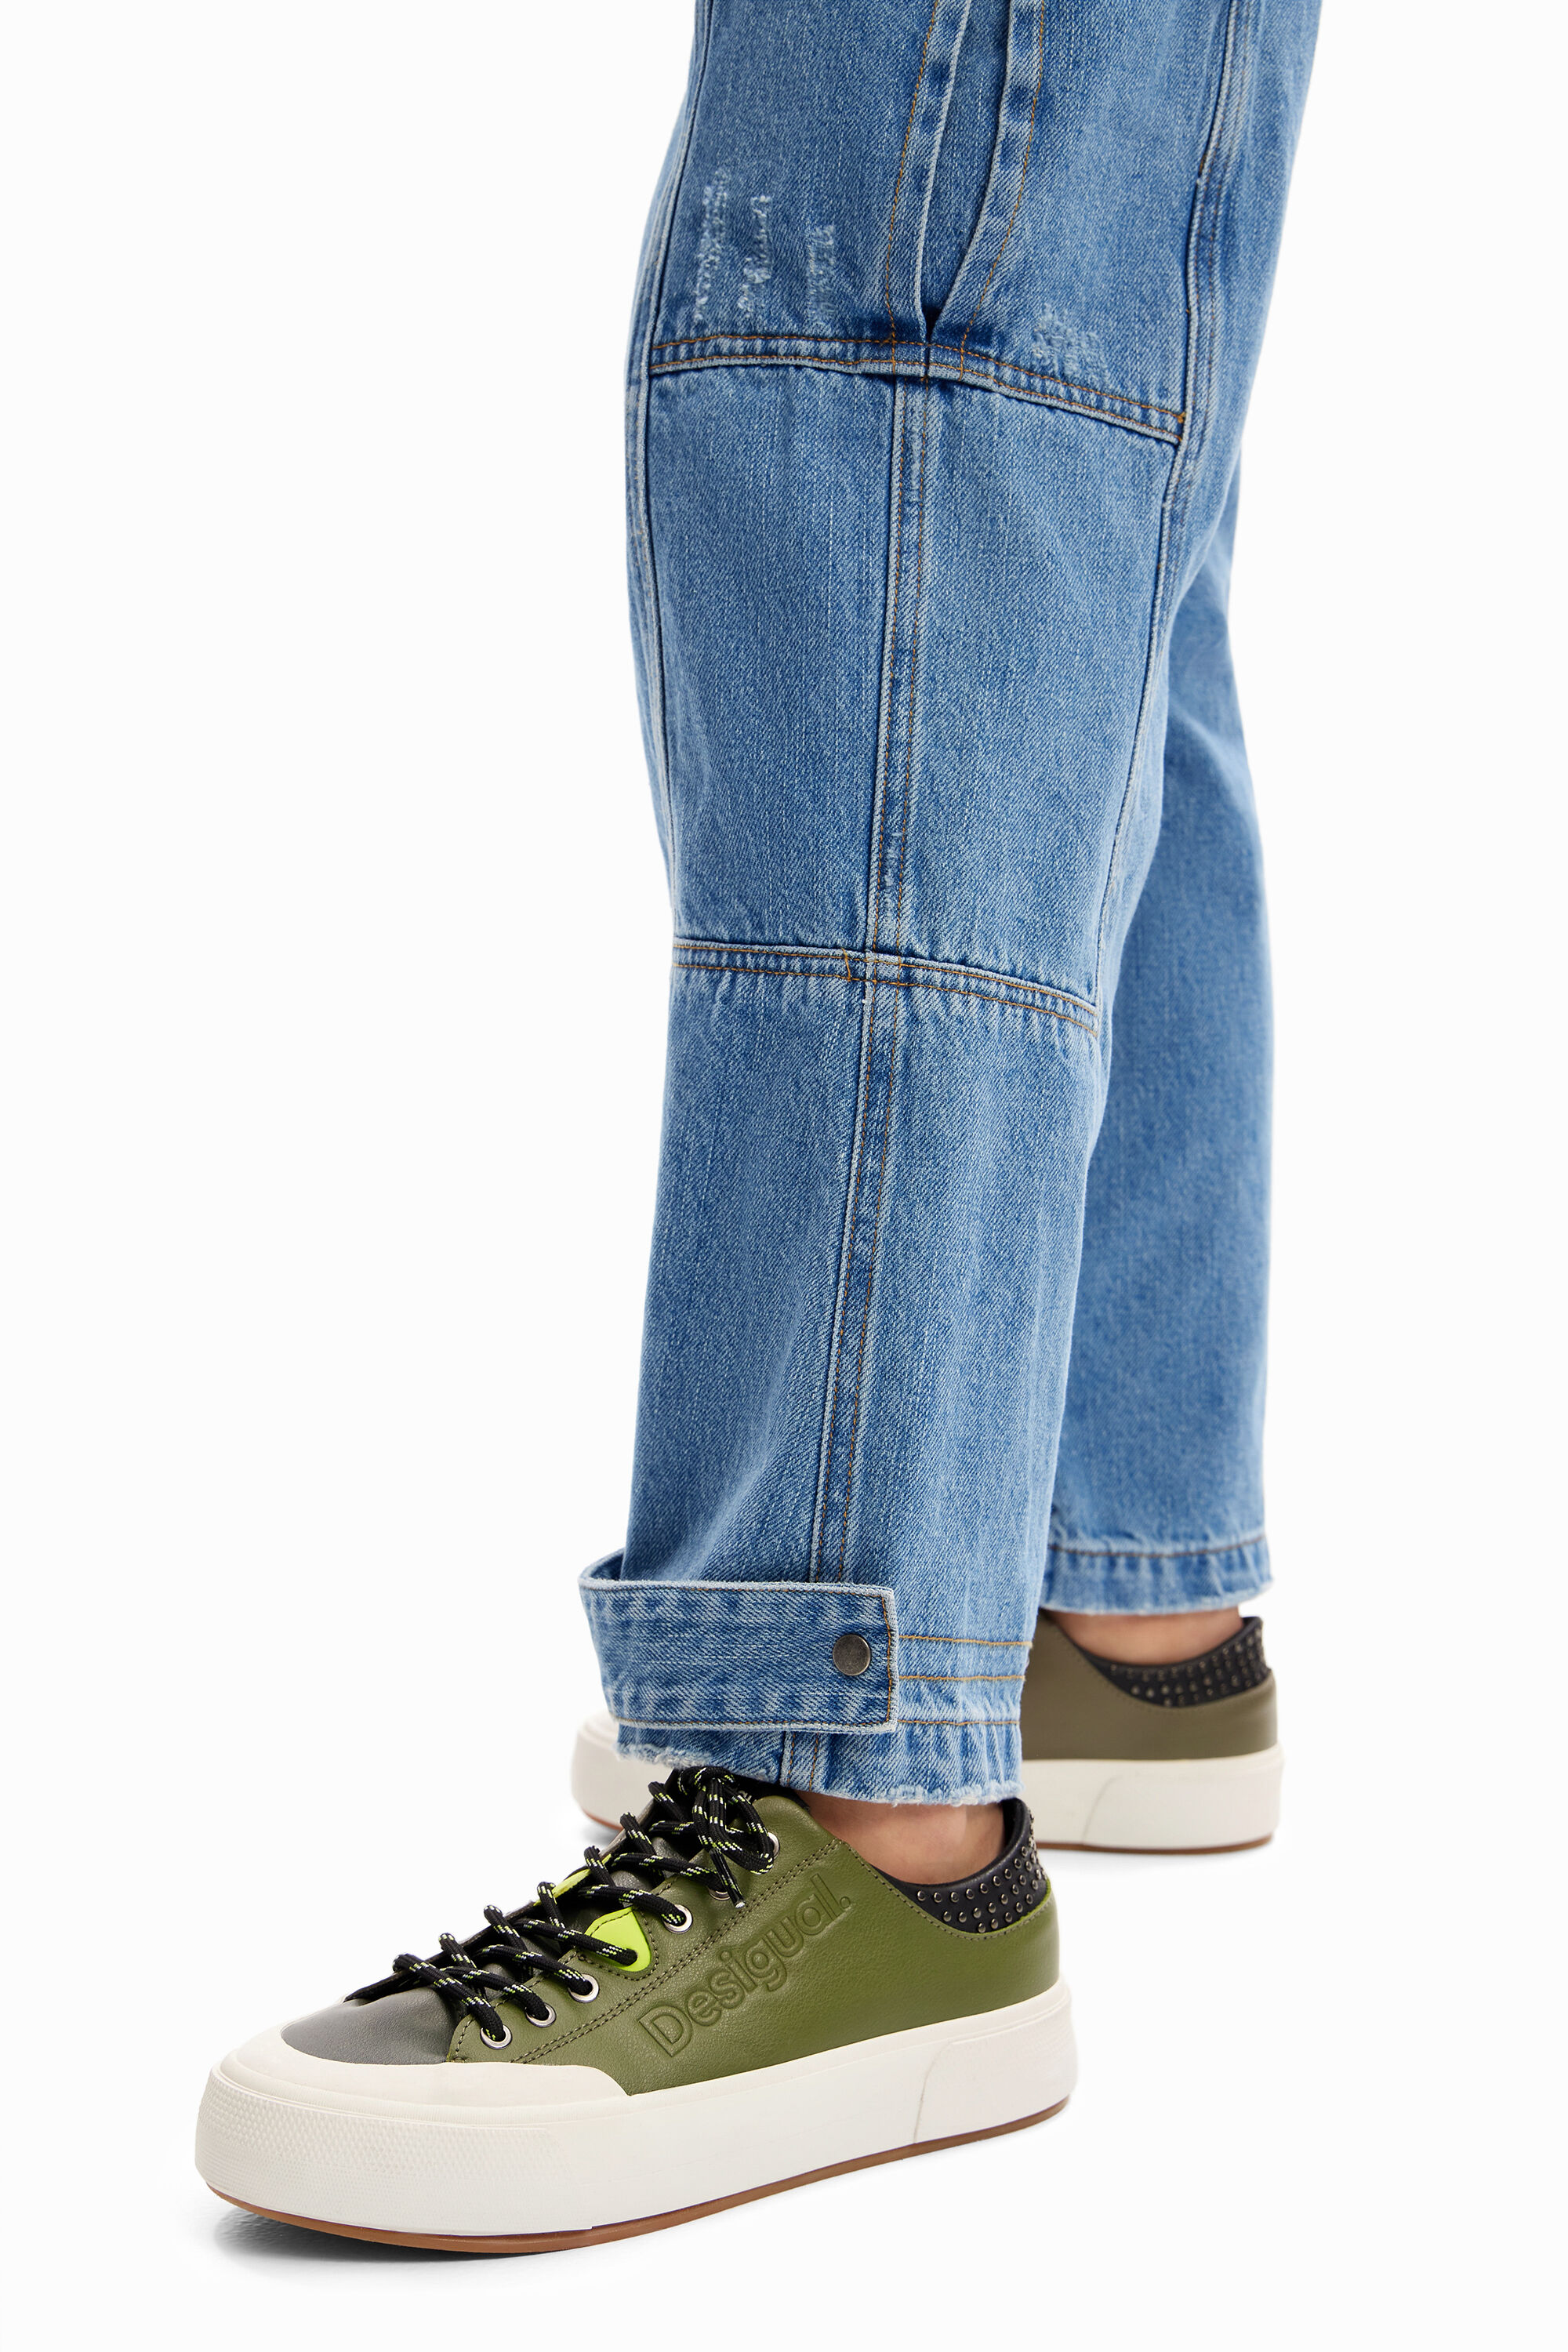 Shop Common Projects Men's Original Achilles Leather Low-Top Sneakers |  Saks Fifth Avenue